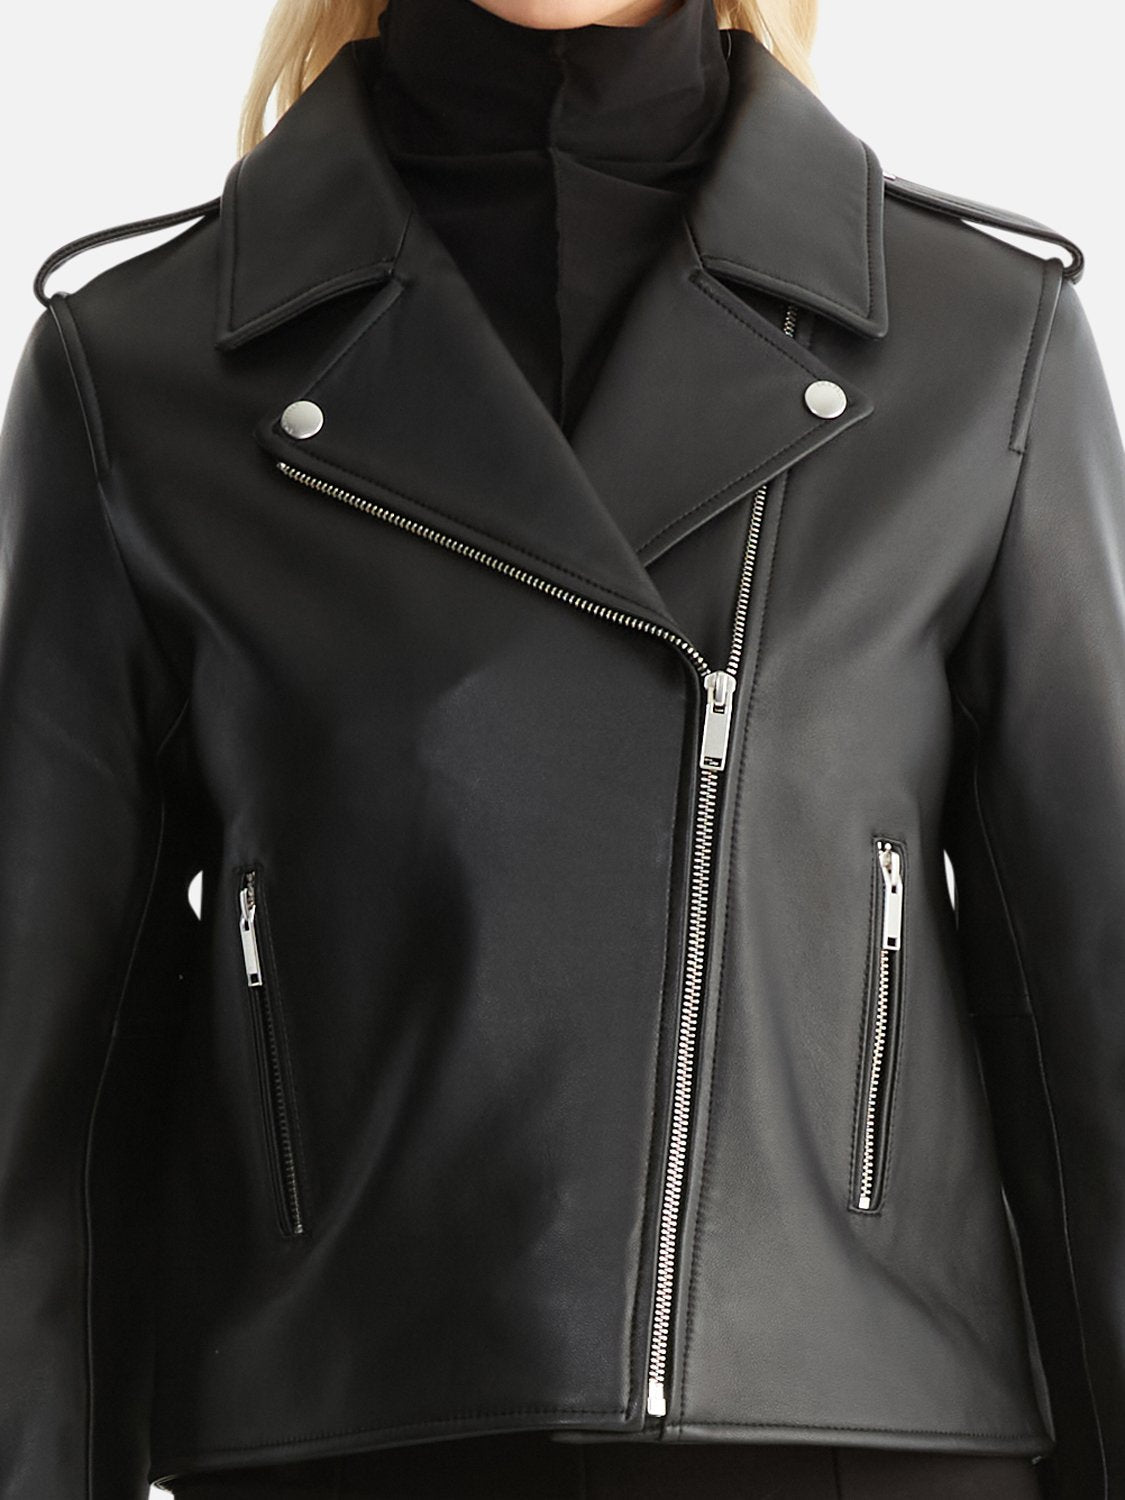 Essential Leather Biker Jacket 2.0 - Black